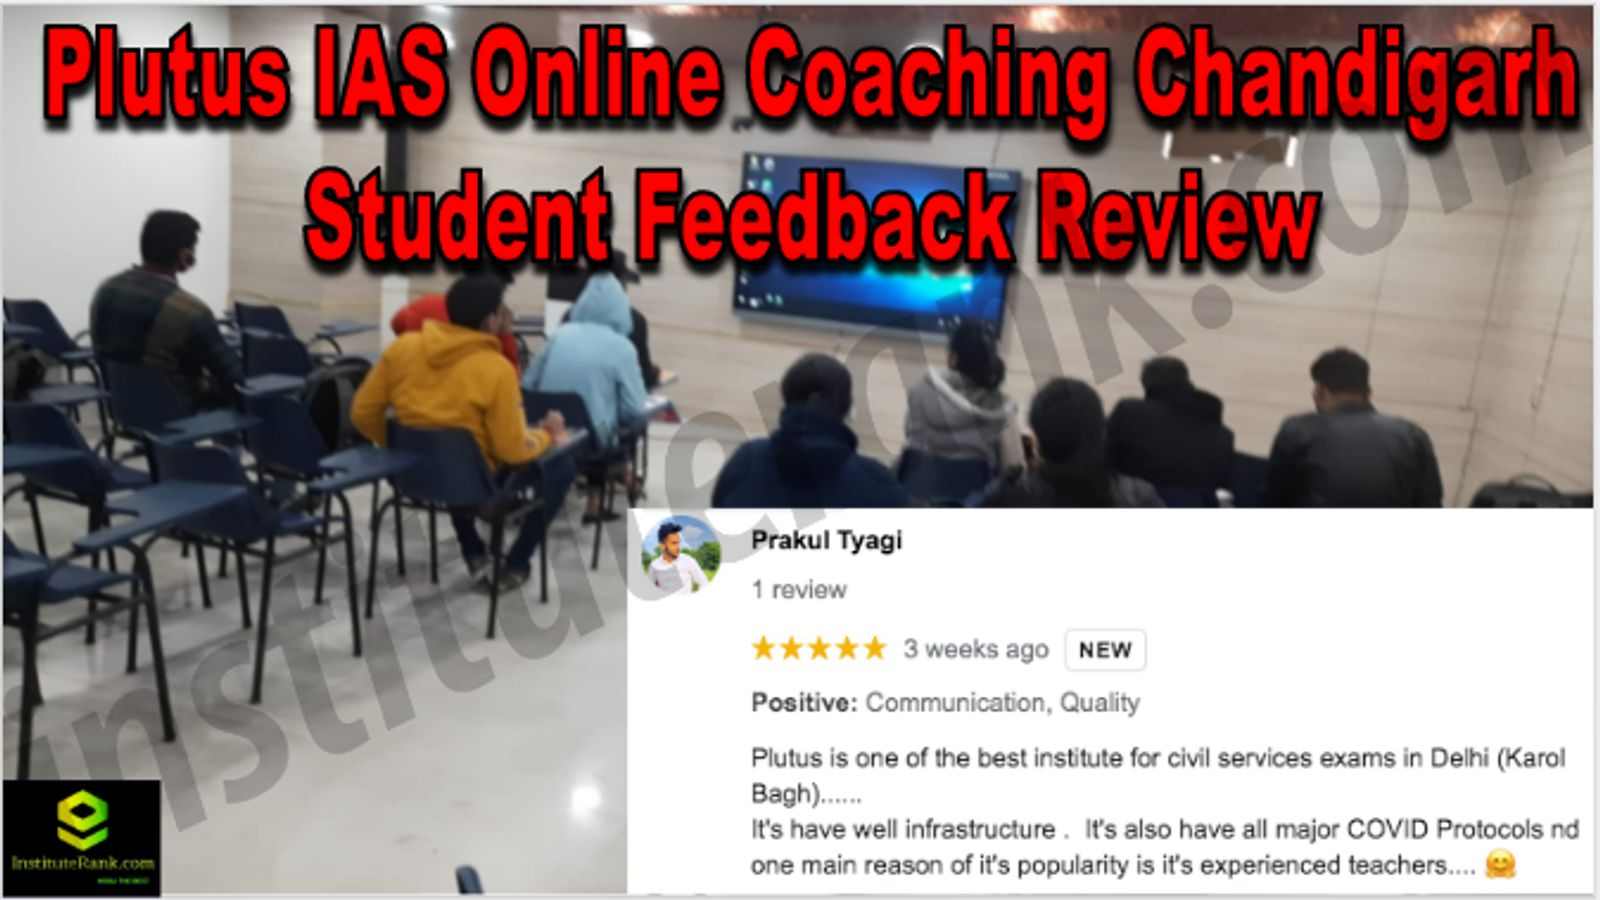 Plutus IAS Online Coaching Chandigarh Student Feedback Reviews